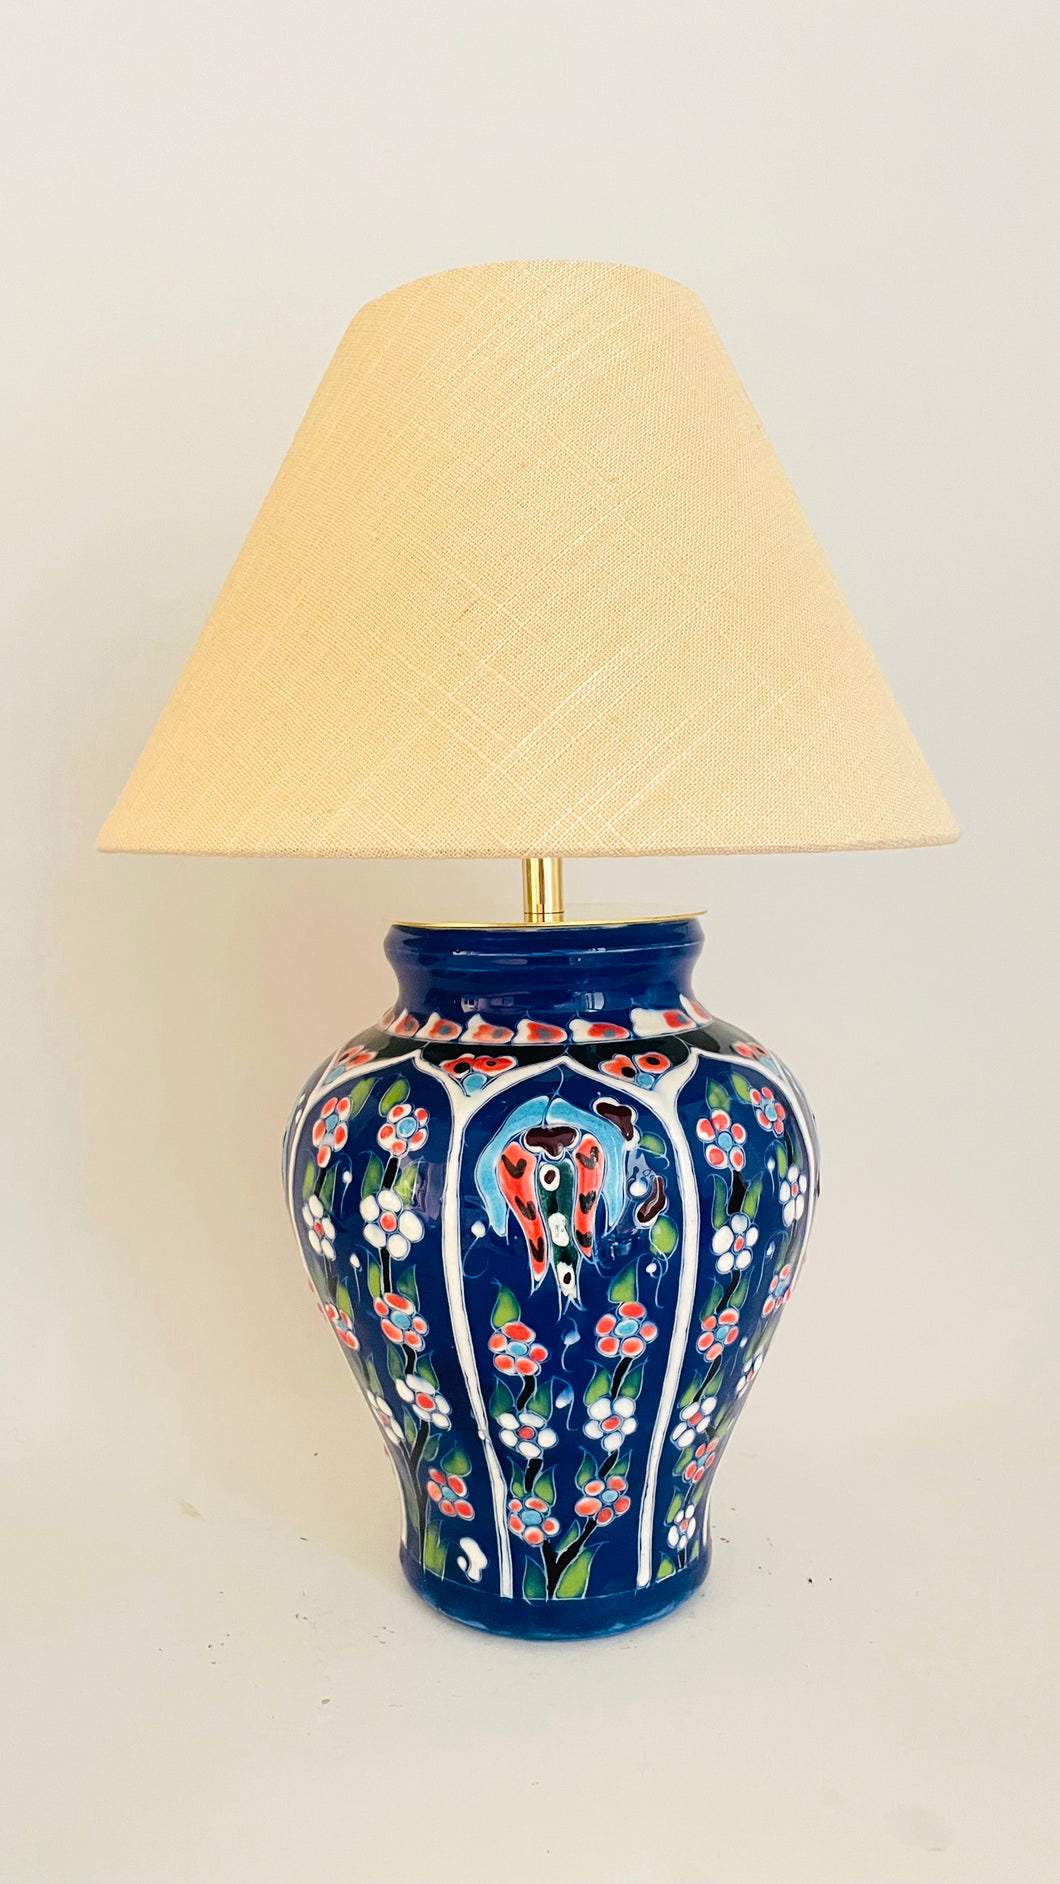 Antique Flower Lamp - pre order for early Jan